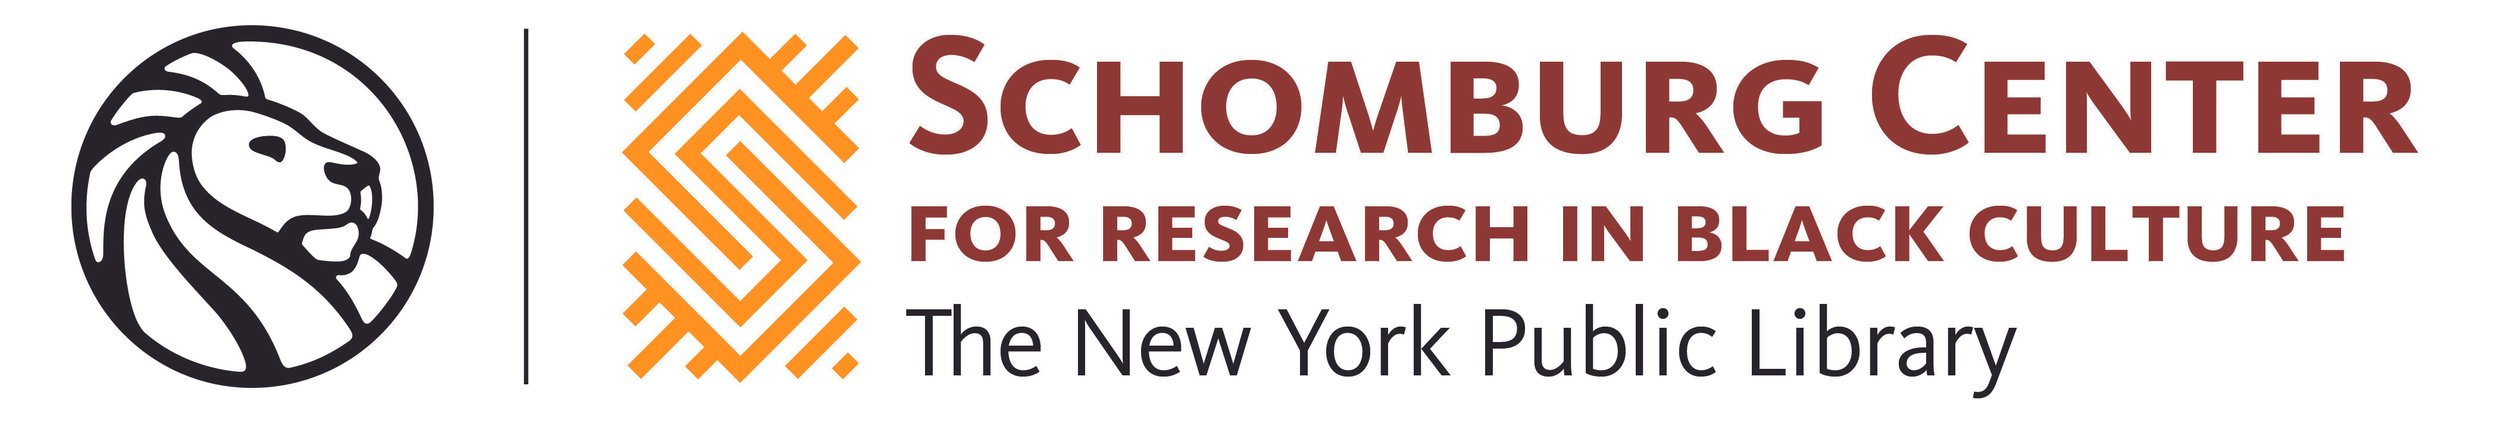 New York Public Library Schomburg Center Logo.jpeg